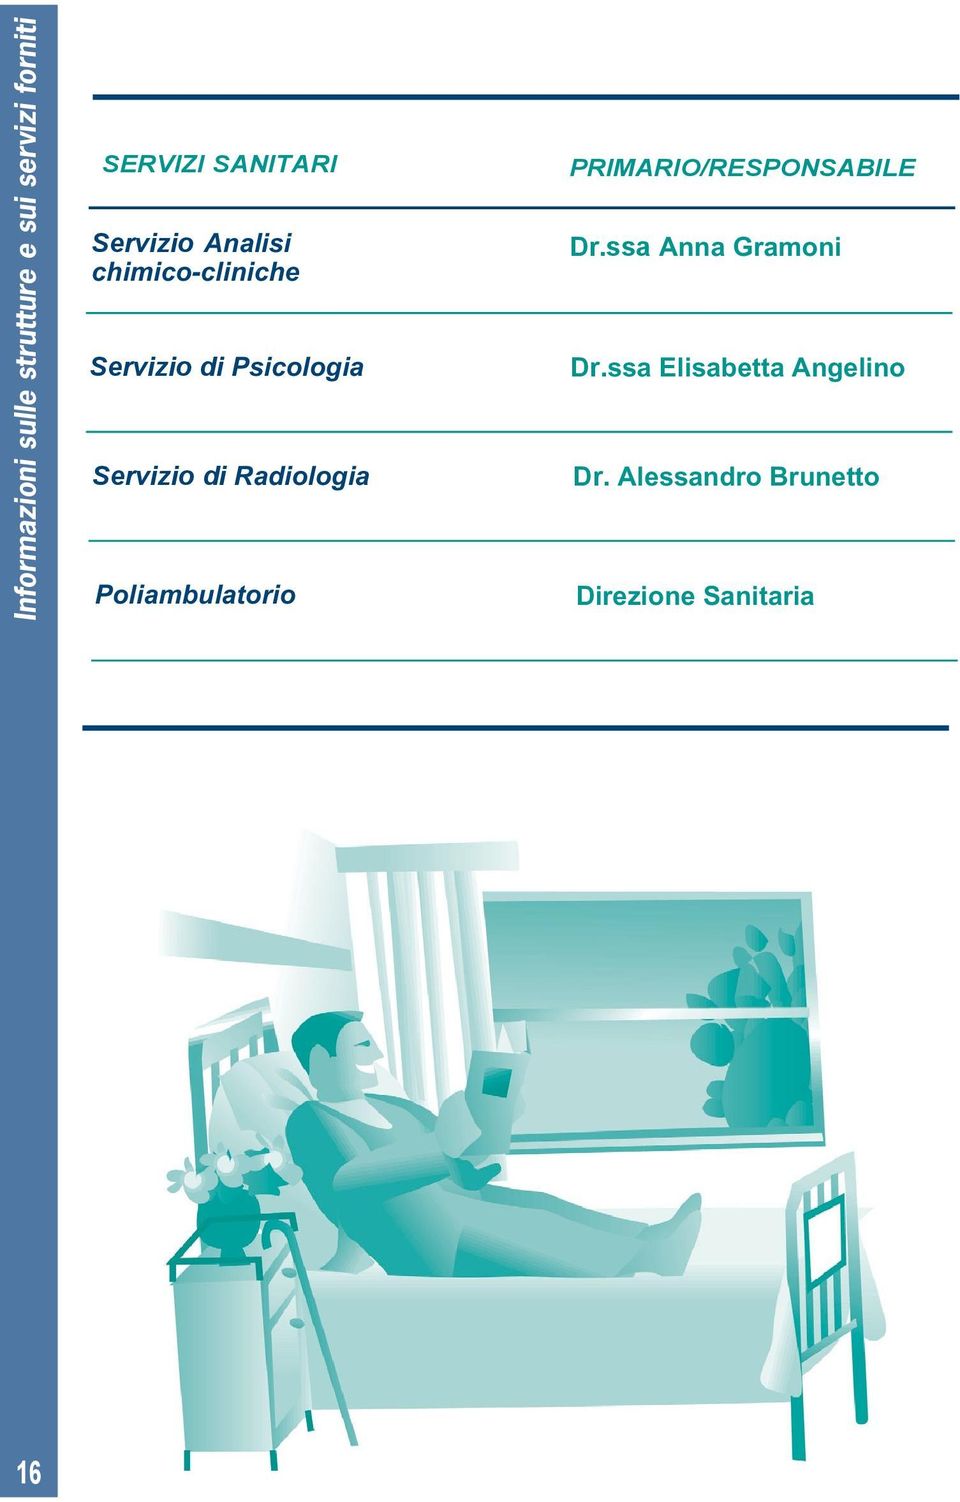 Radiologia Poliambulatorio PRIMARIO/RESPONSABILE Dr.